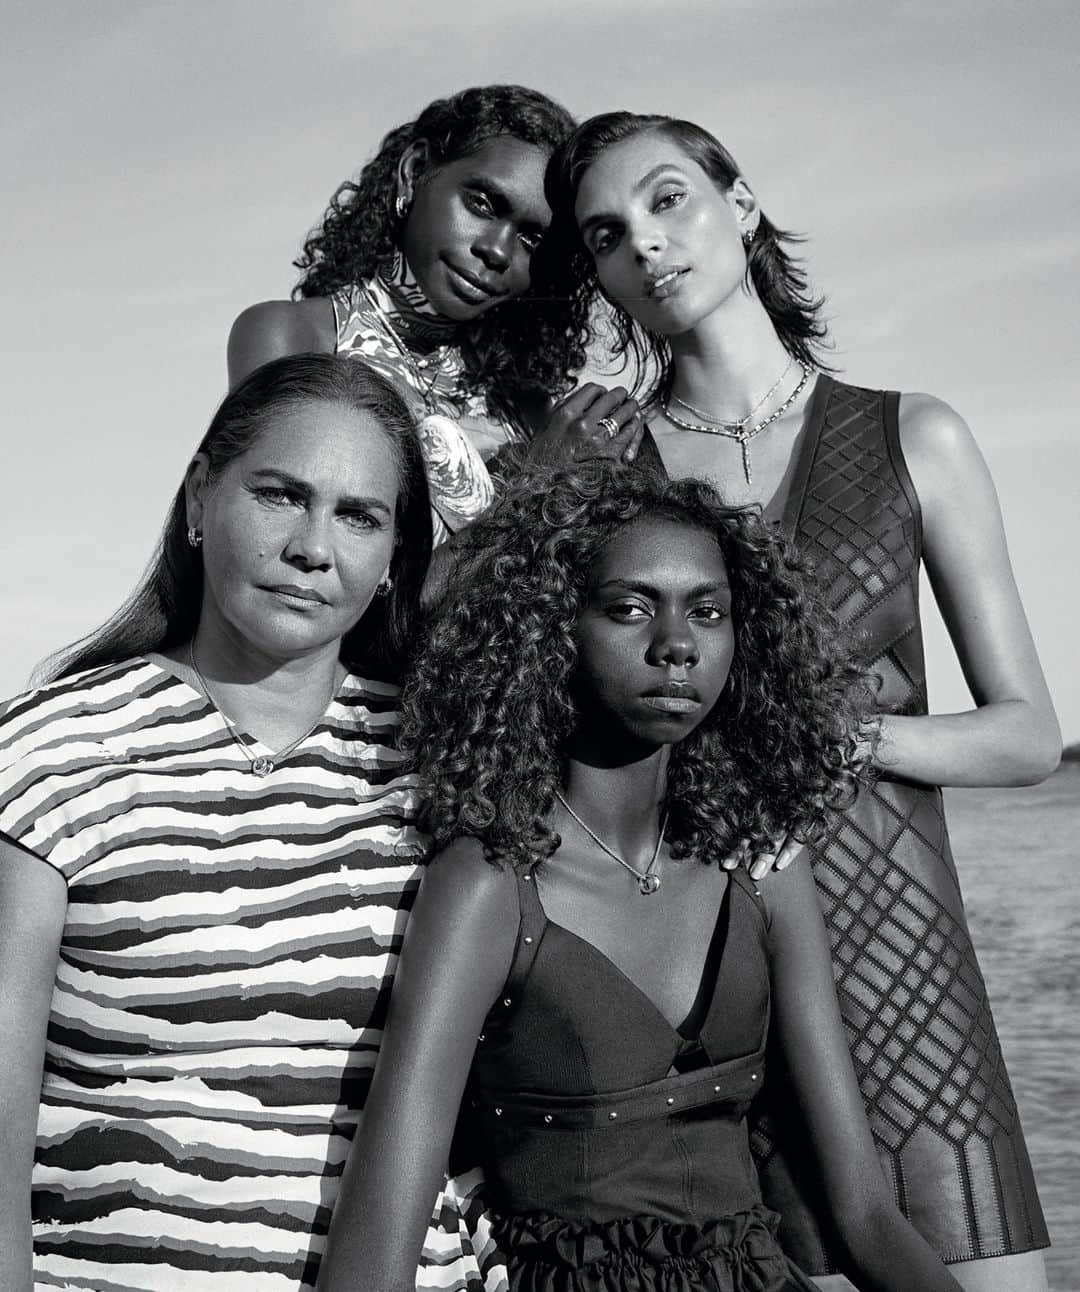 Vogue Australiaのインスタグラム